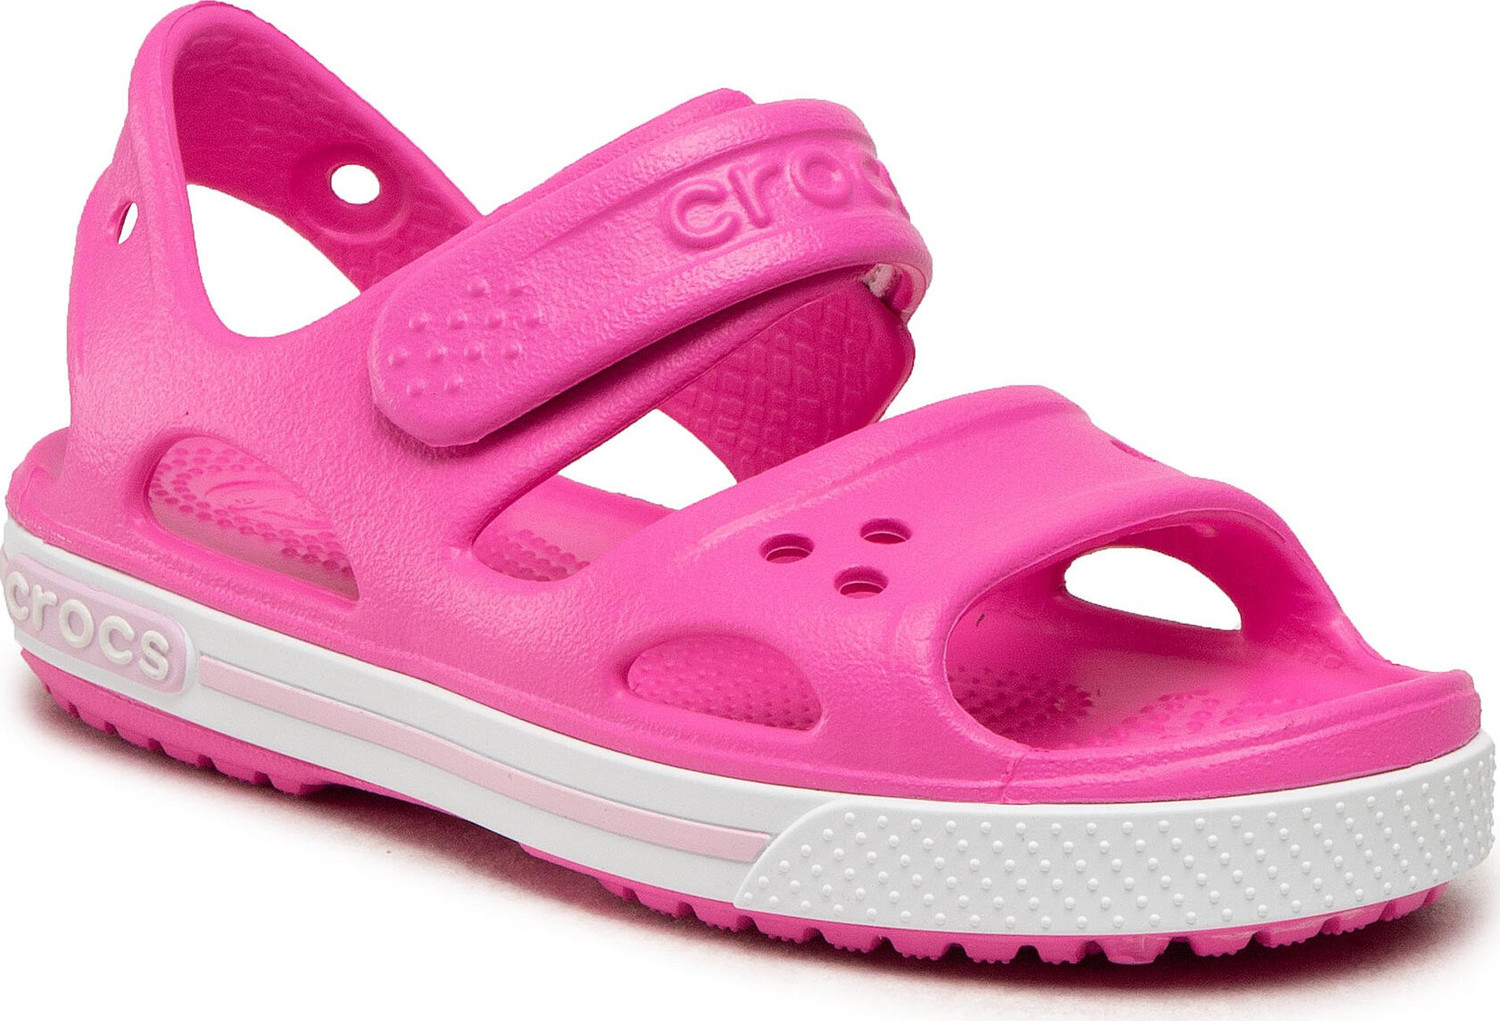 Sandály Crocs Crocband II Sandal Ps 14854 Electric Pink